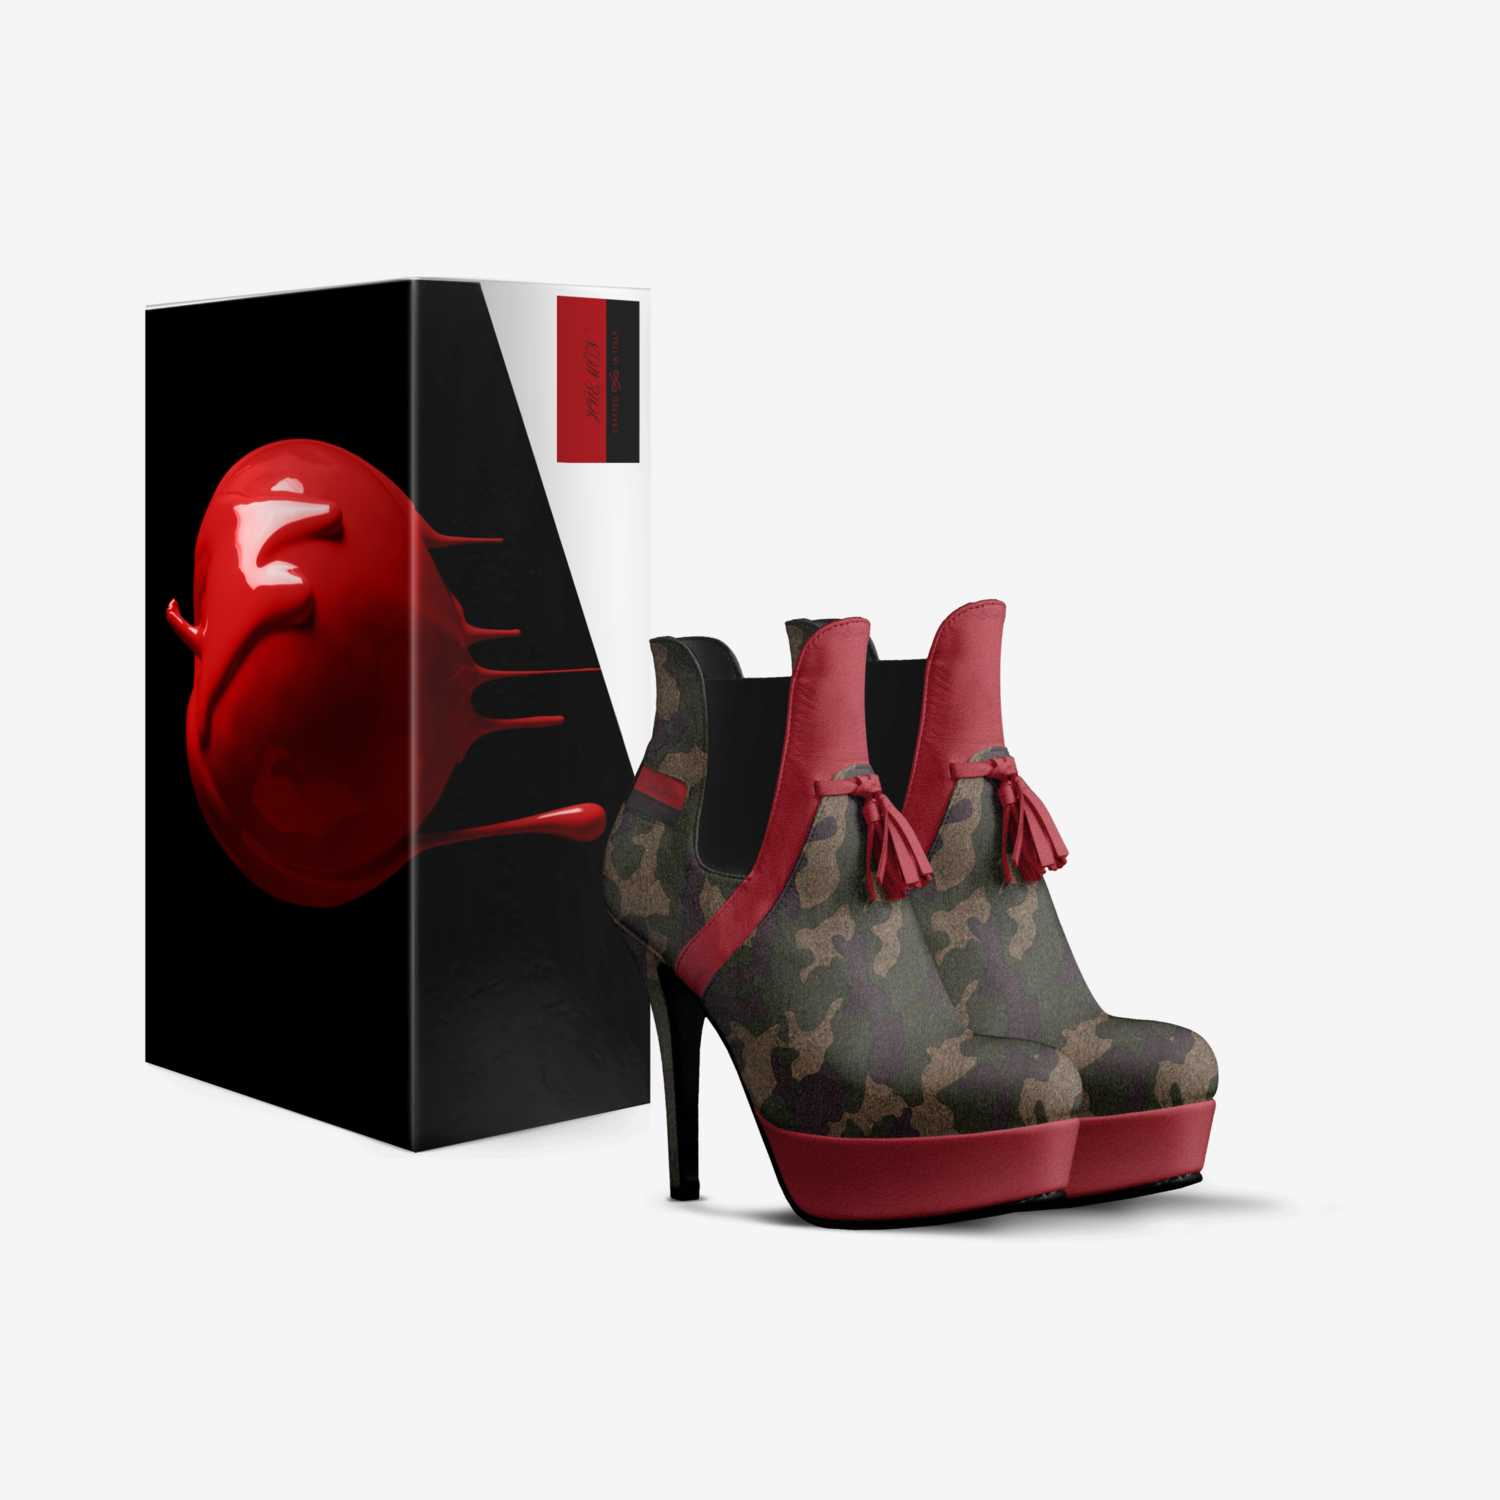 HÜEMÖN custom made in Italy shoes by Shariffa Nyan | Box view